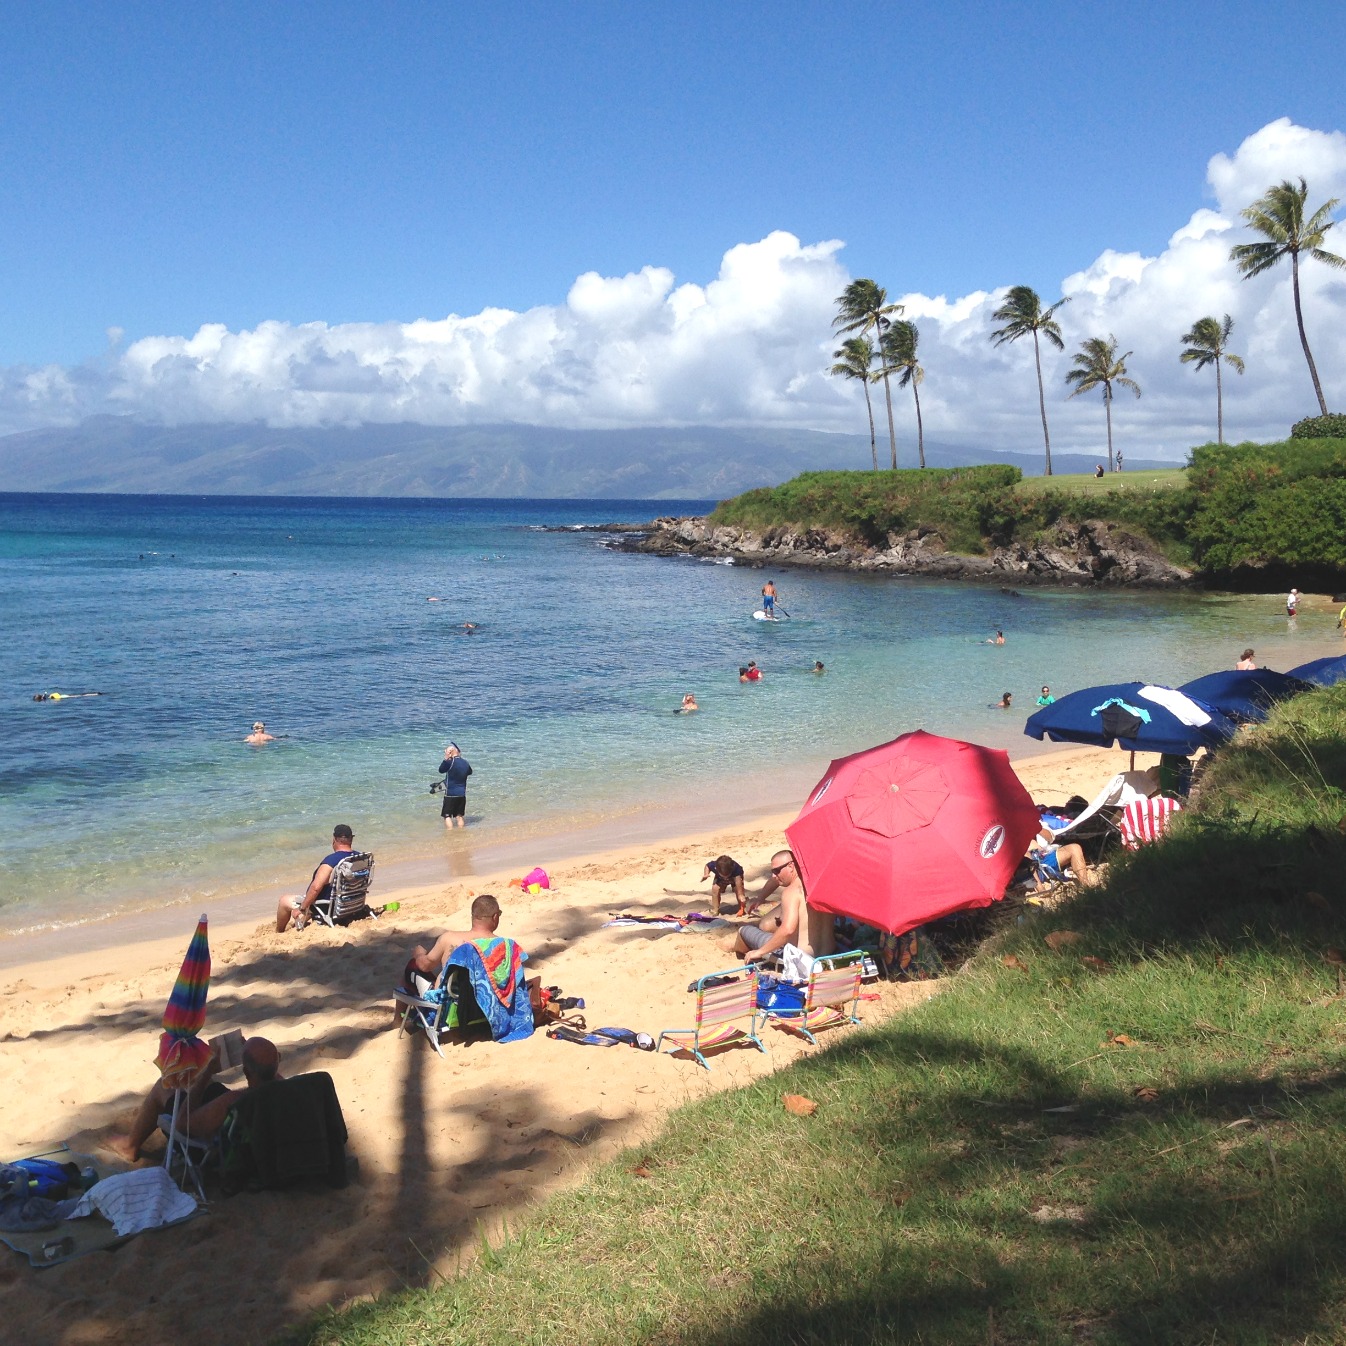 maui hawaii vacations